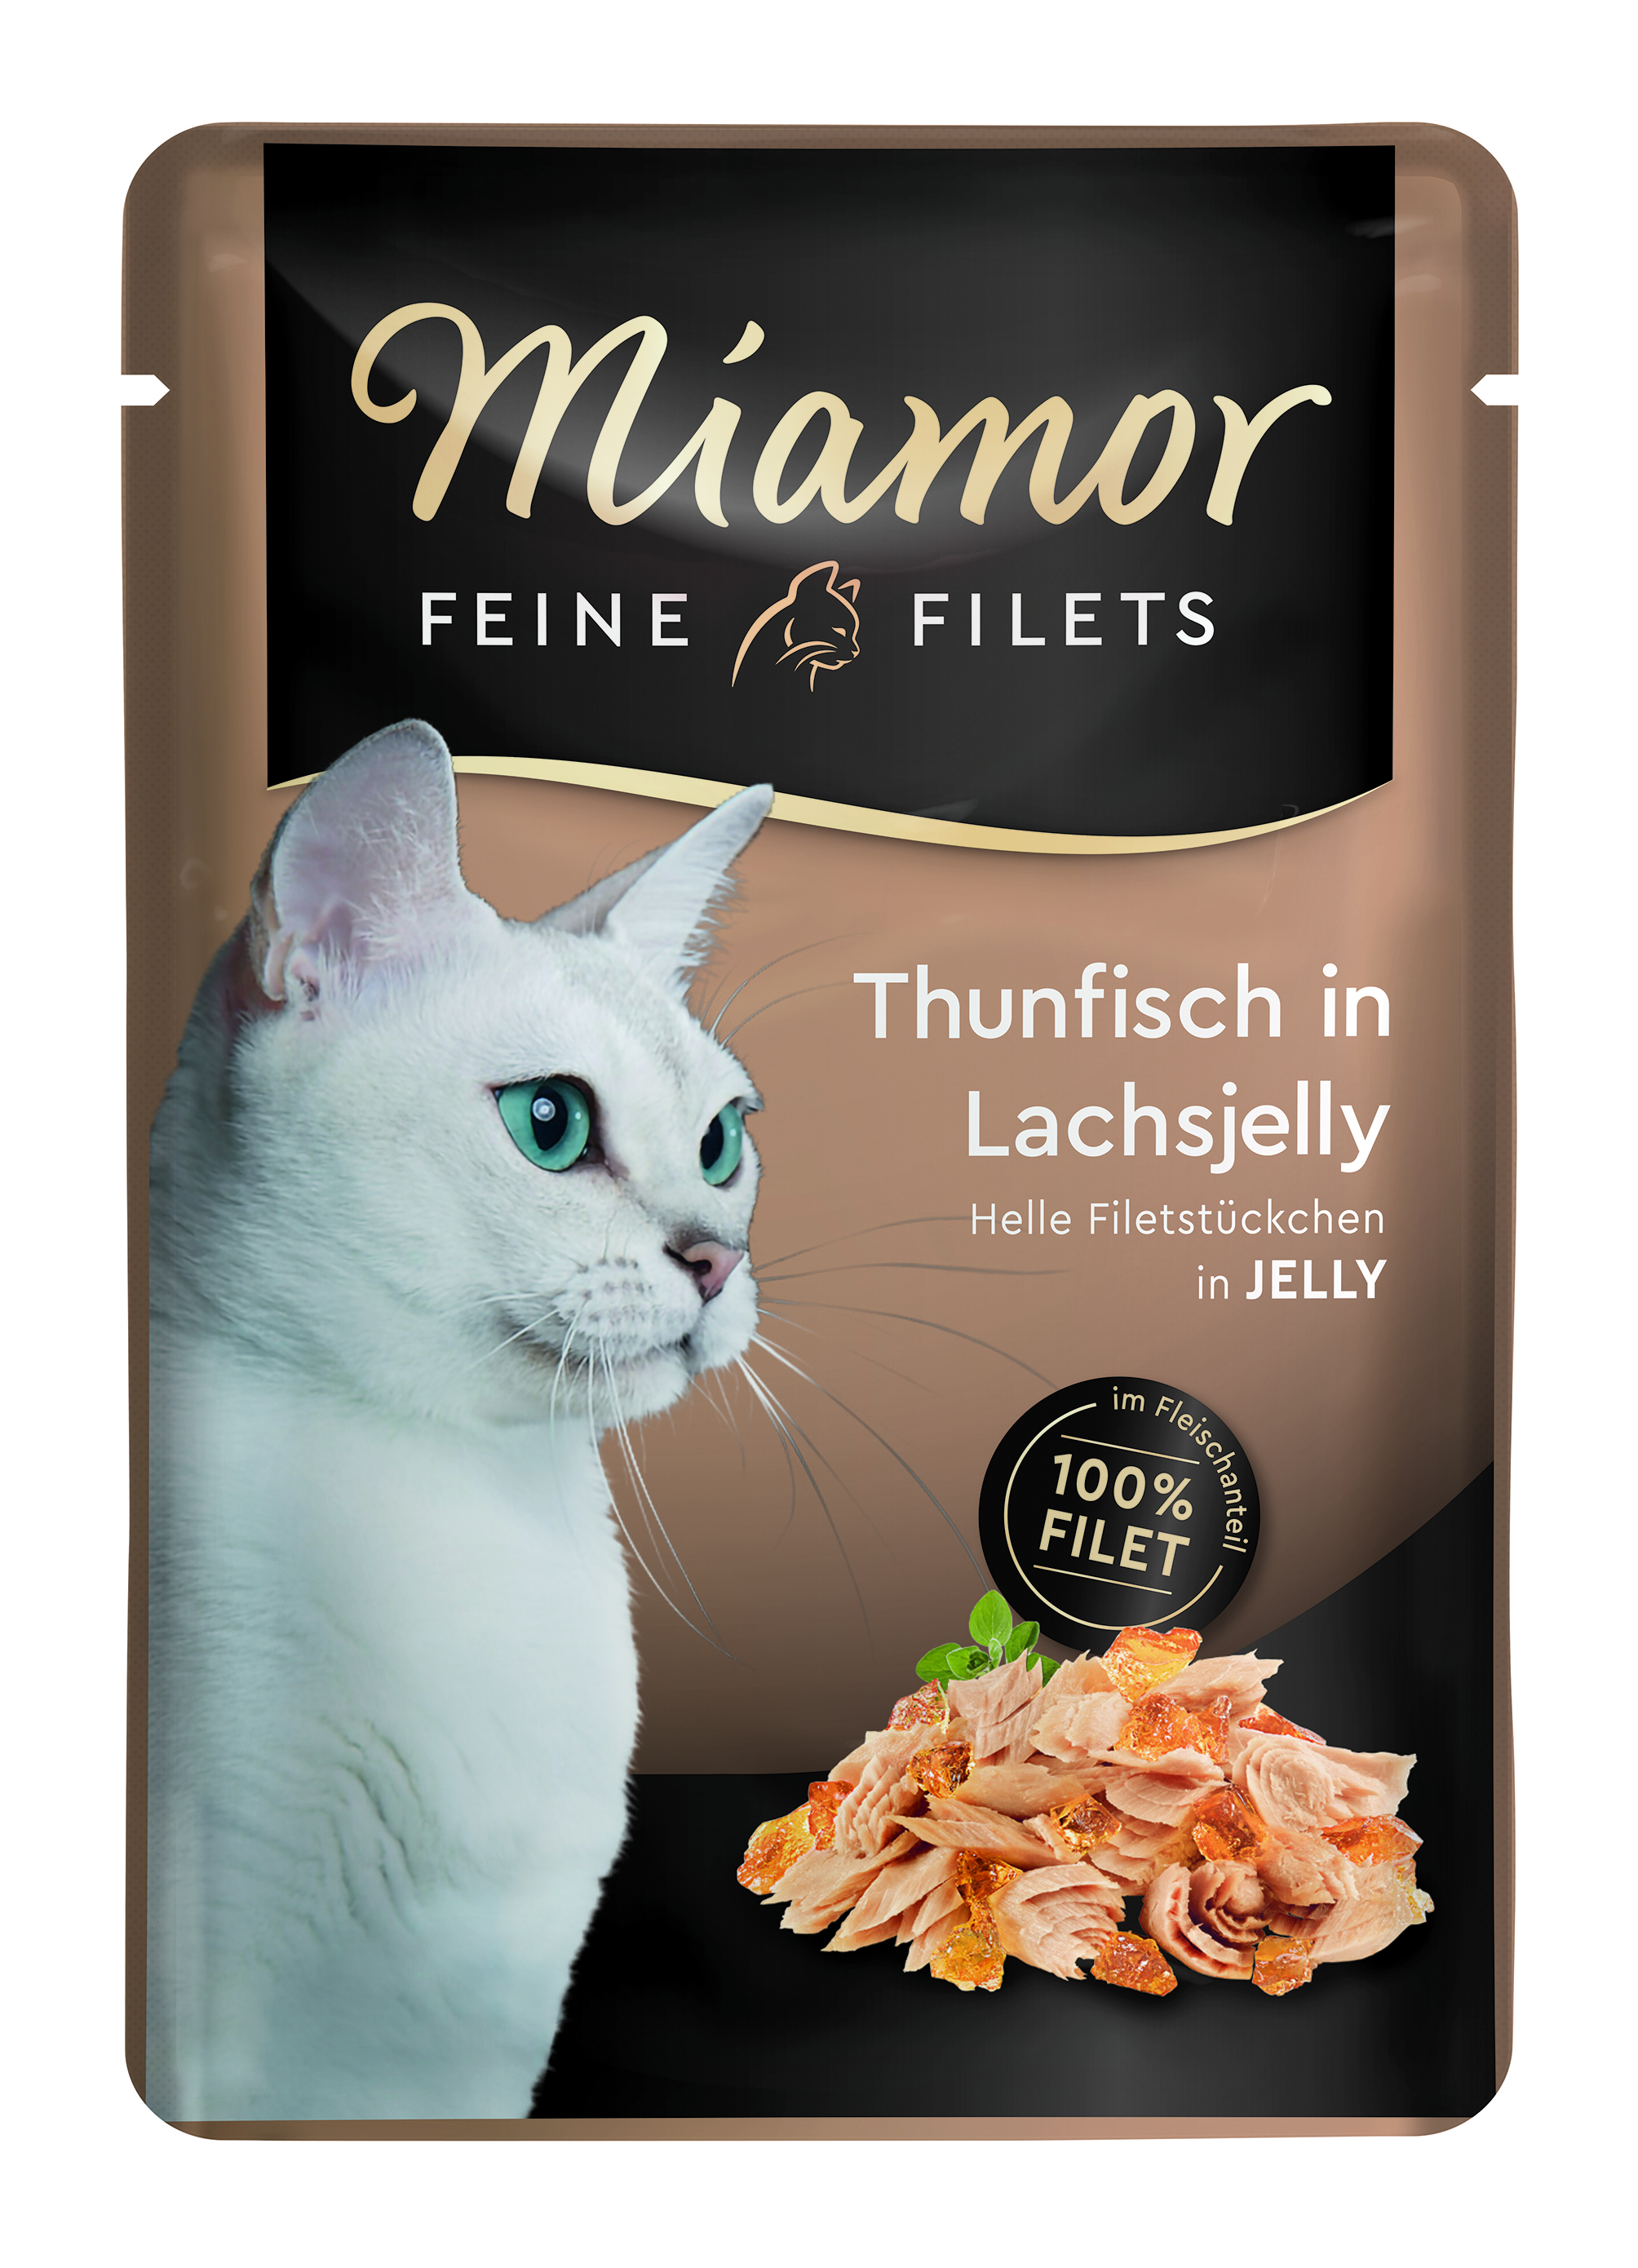 Miamor Feine Filets Thunfisch in Lachsjelly 100g